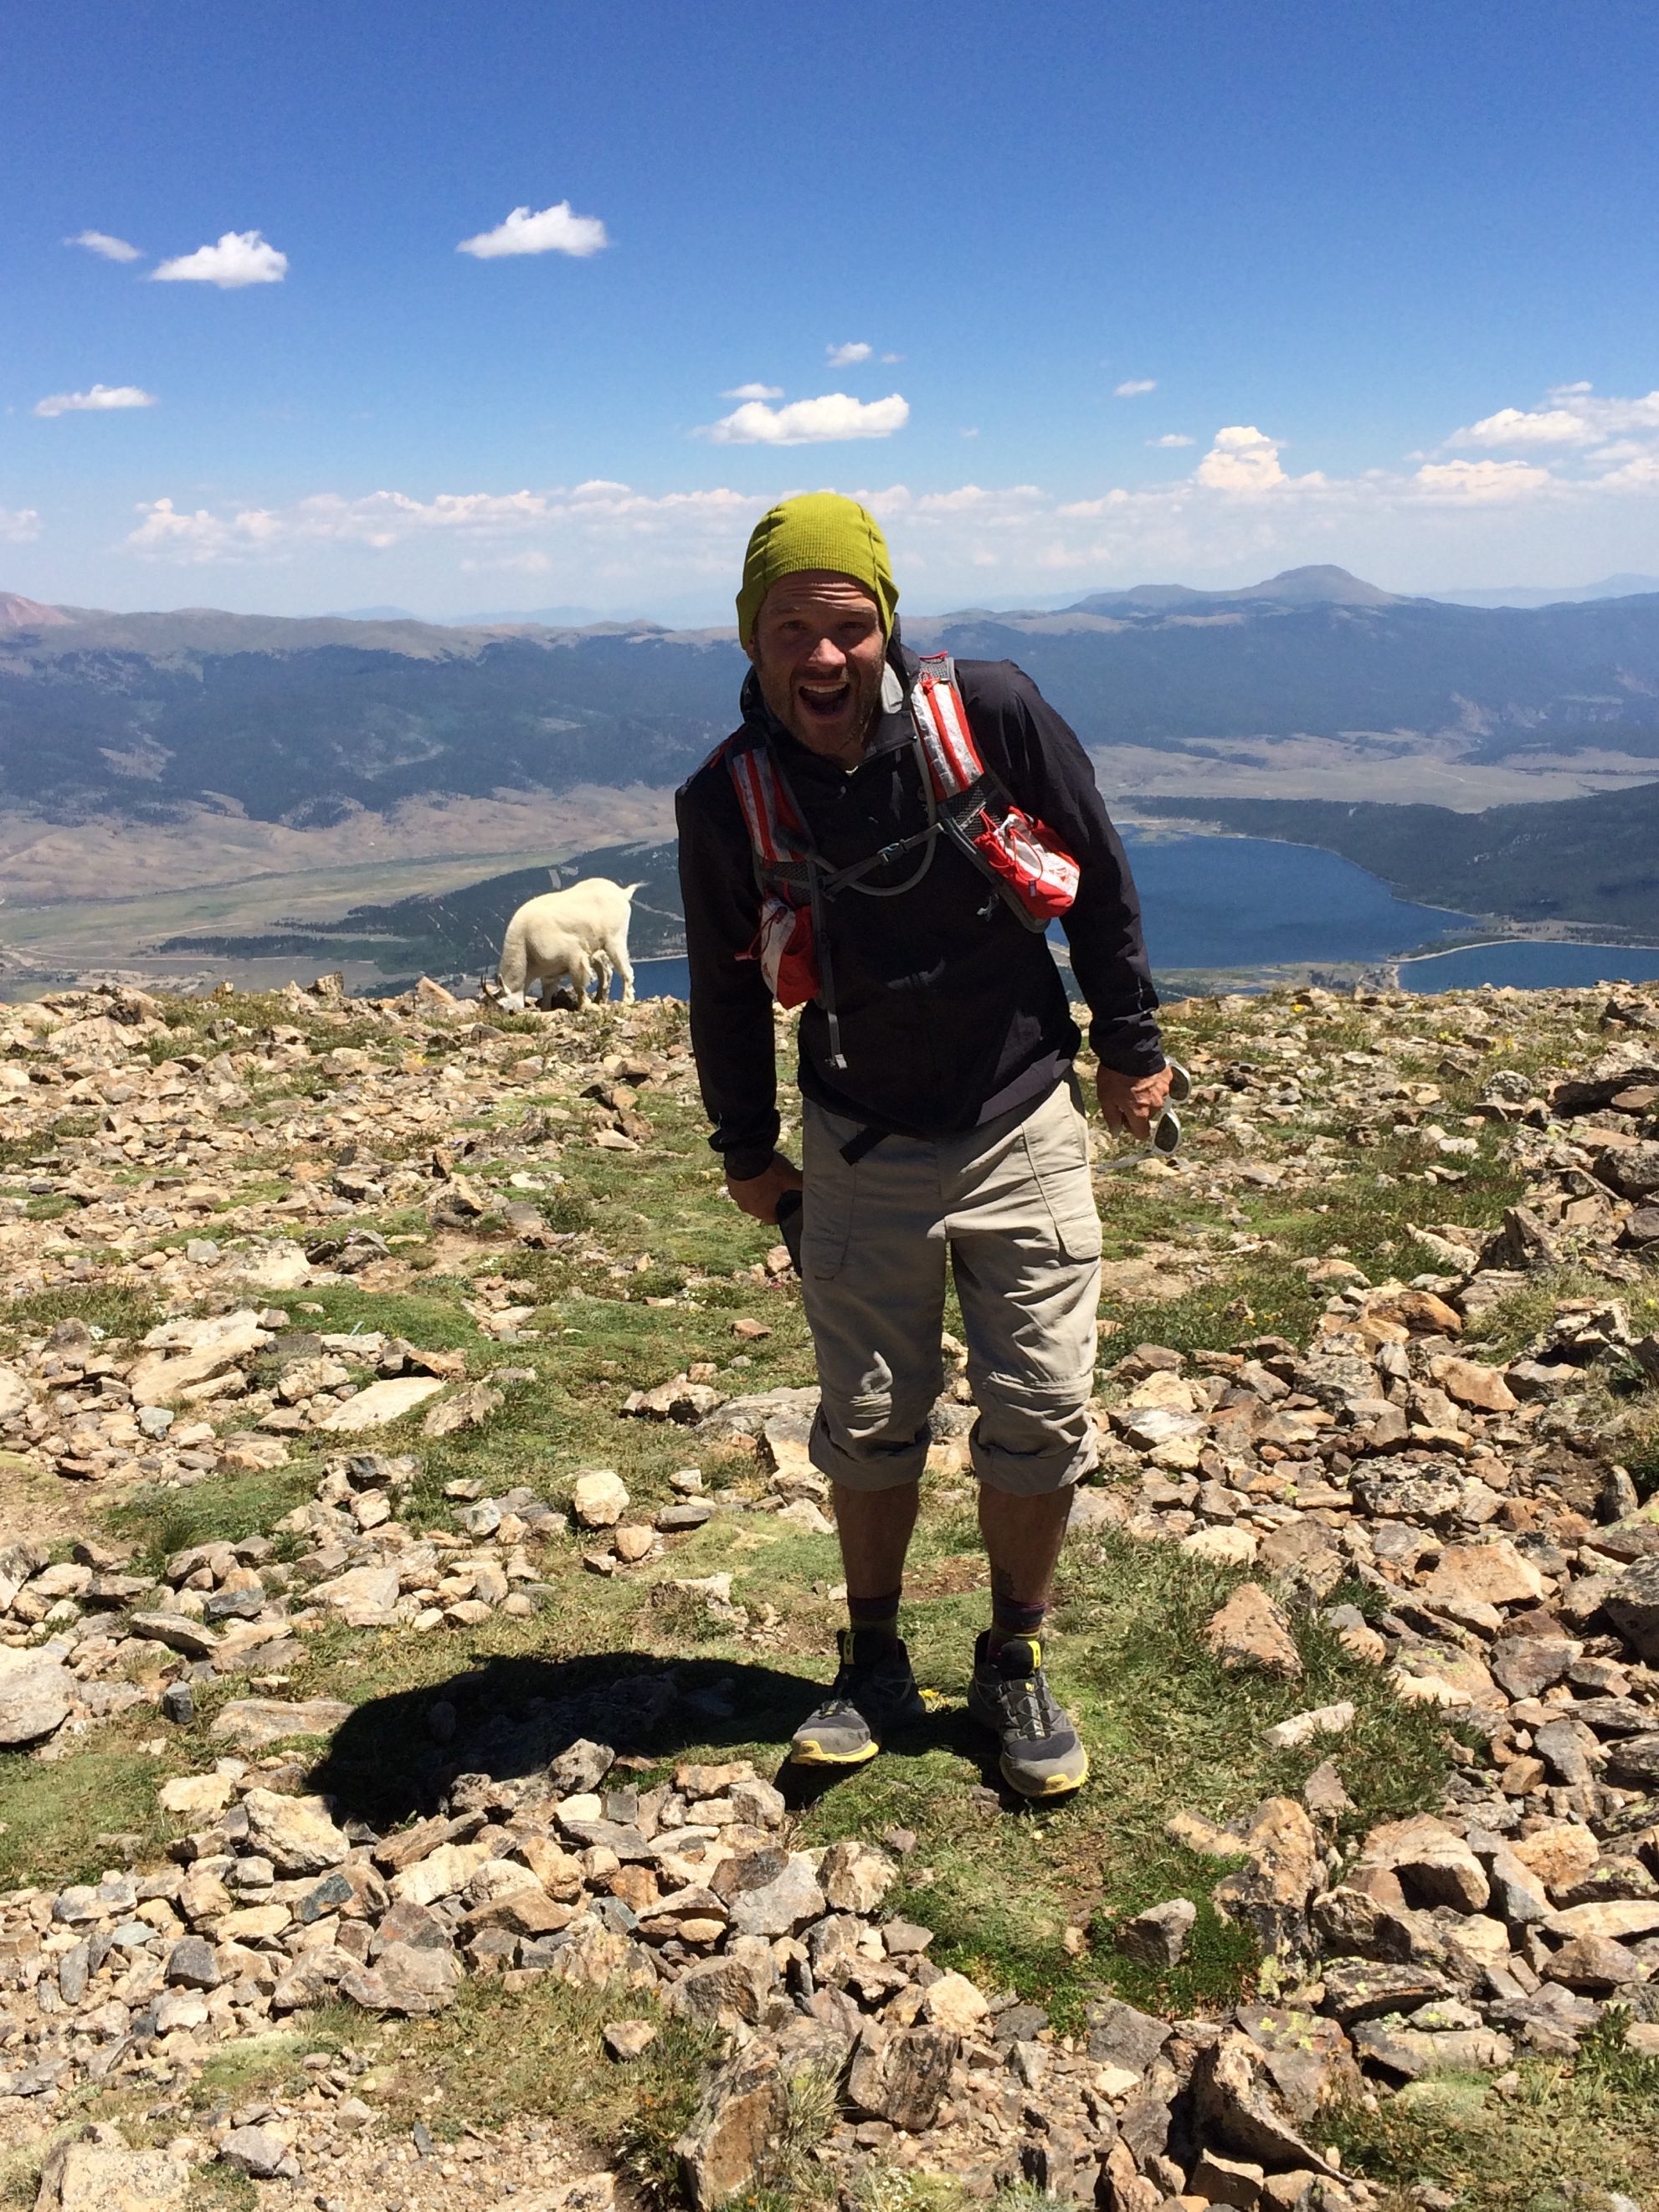 Heath Scott on the peak of Mt Elbert (Colorado's highest mountain, 14,439 ft), shadowboxing with a mountain goat. Photo credit: Lauren Koutavas